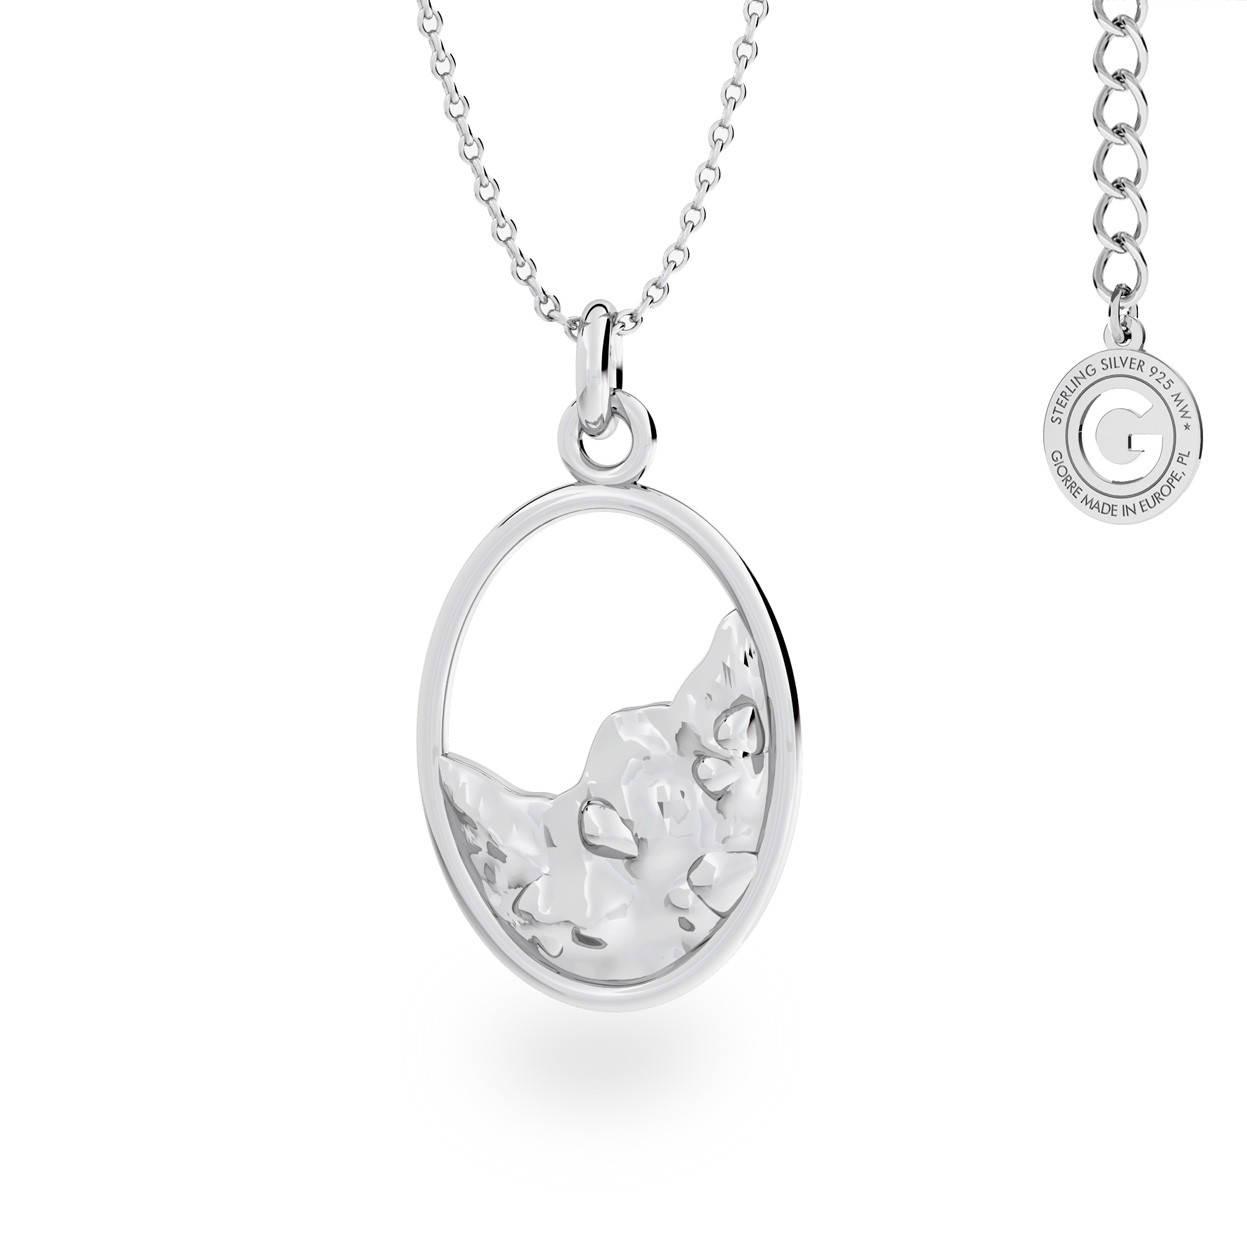 Necklace with decorative ellipse pendant, Silver 925